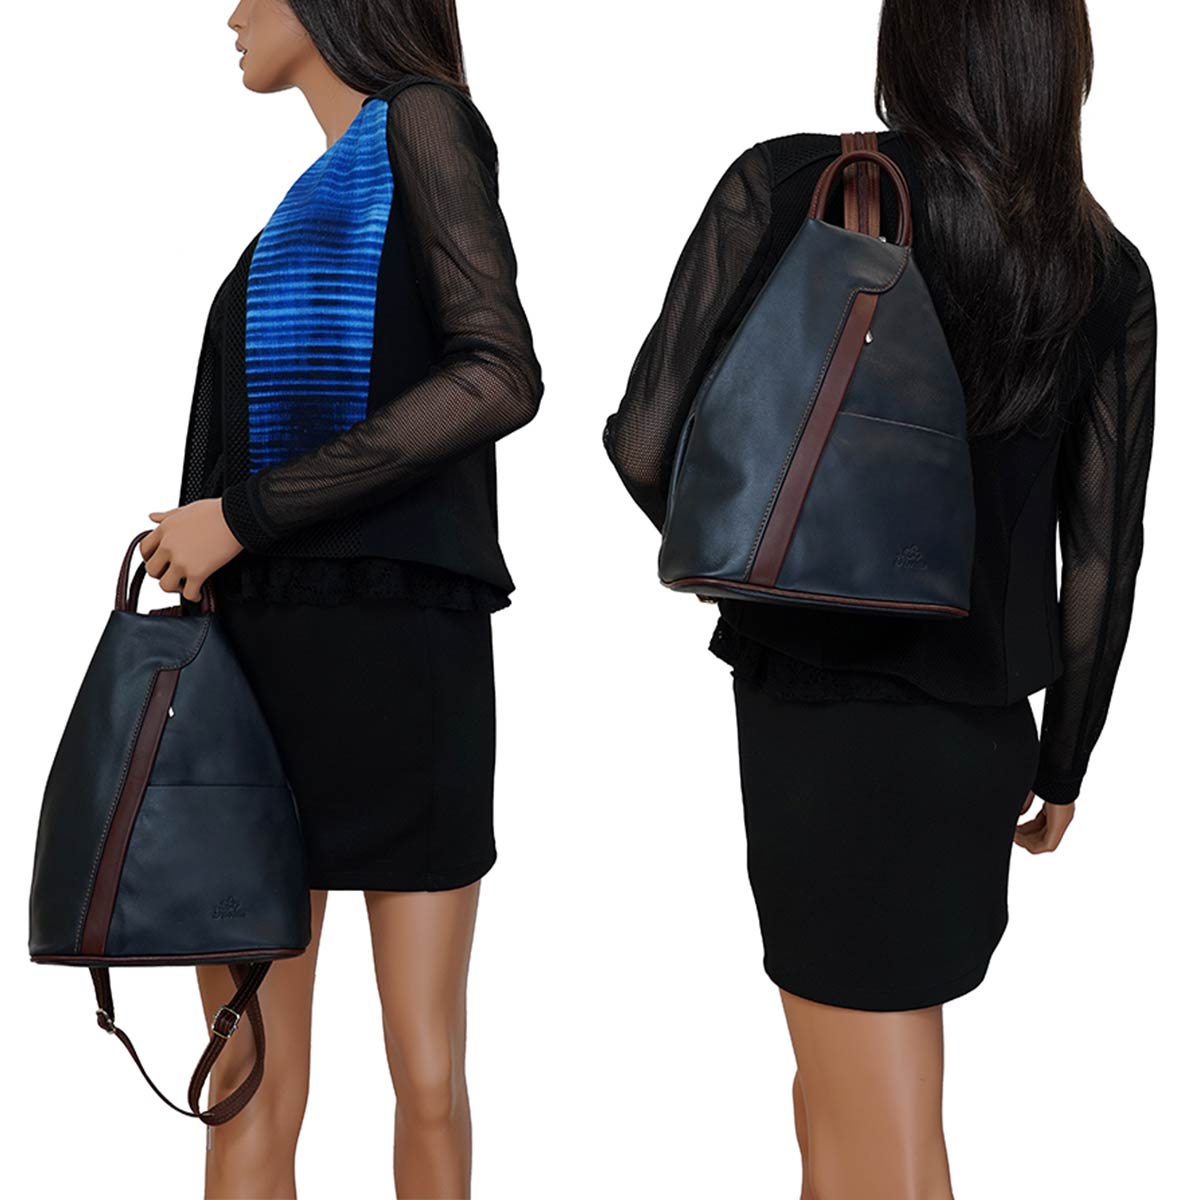 Fioretta Italian Genuine Leather Top Handle Backpack Purse Shoulder Bag Handbag Rucksack For Women - Dark Blue Brown